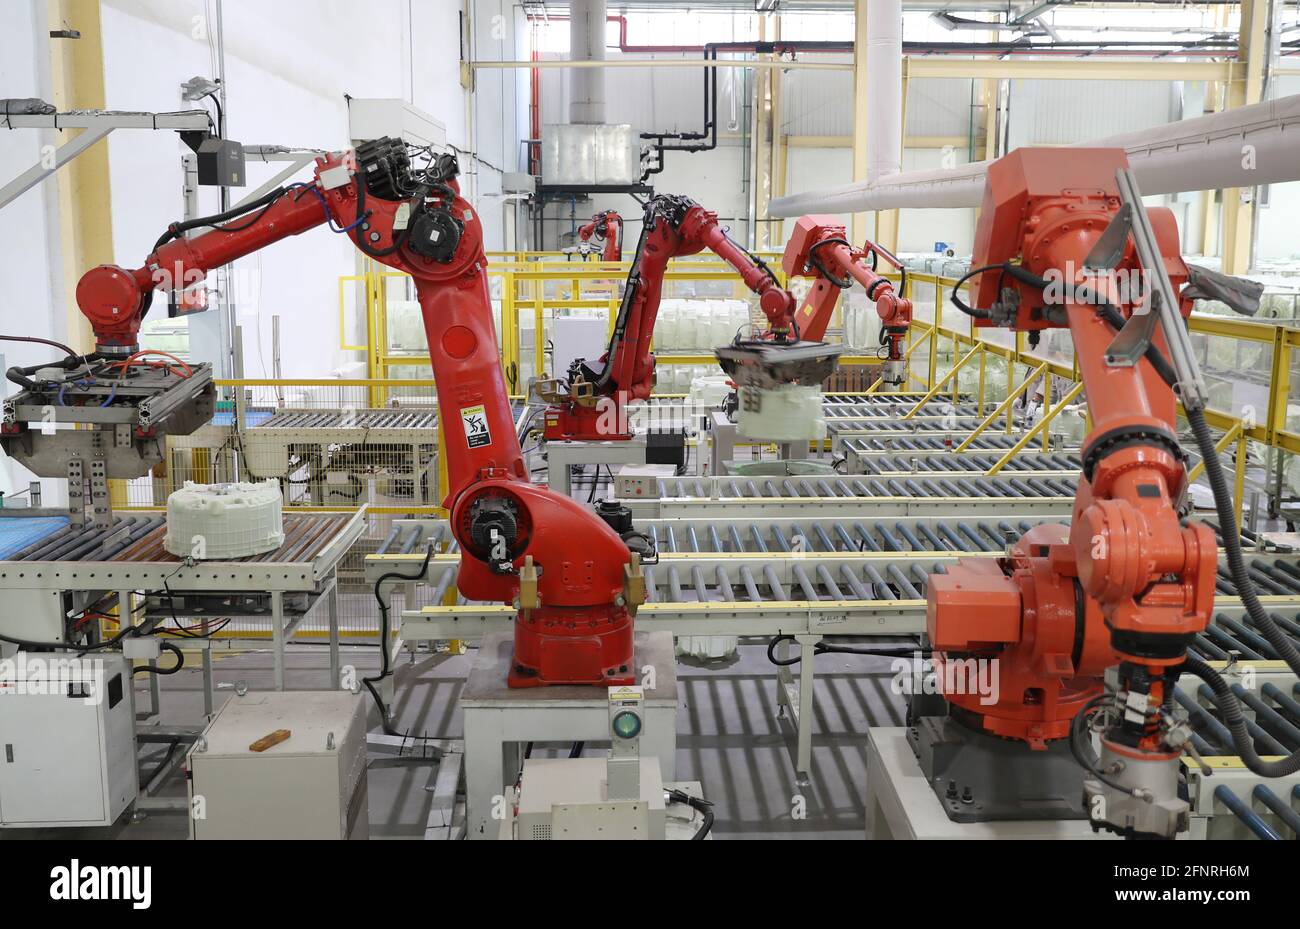 Qingdao, China. Mai 2021. Die intelligente 5G-Fabrik läuft am 18. Mai 2021 in Qingdao, Shandong, China, hocheffizient.(Foto: TPG/cnsphotos) Quelle: TopPhoto/Alamy Live News Stockfoto